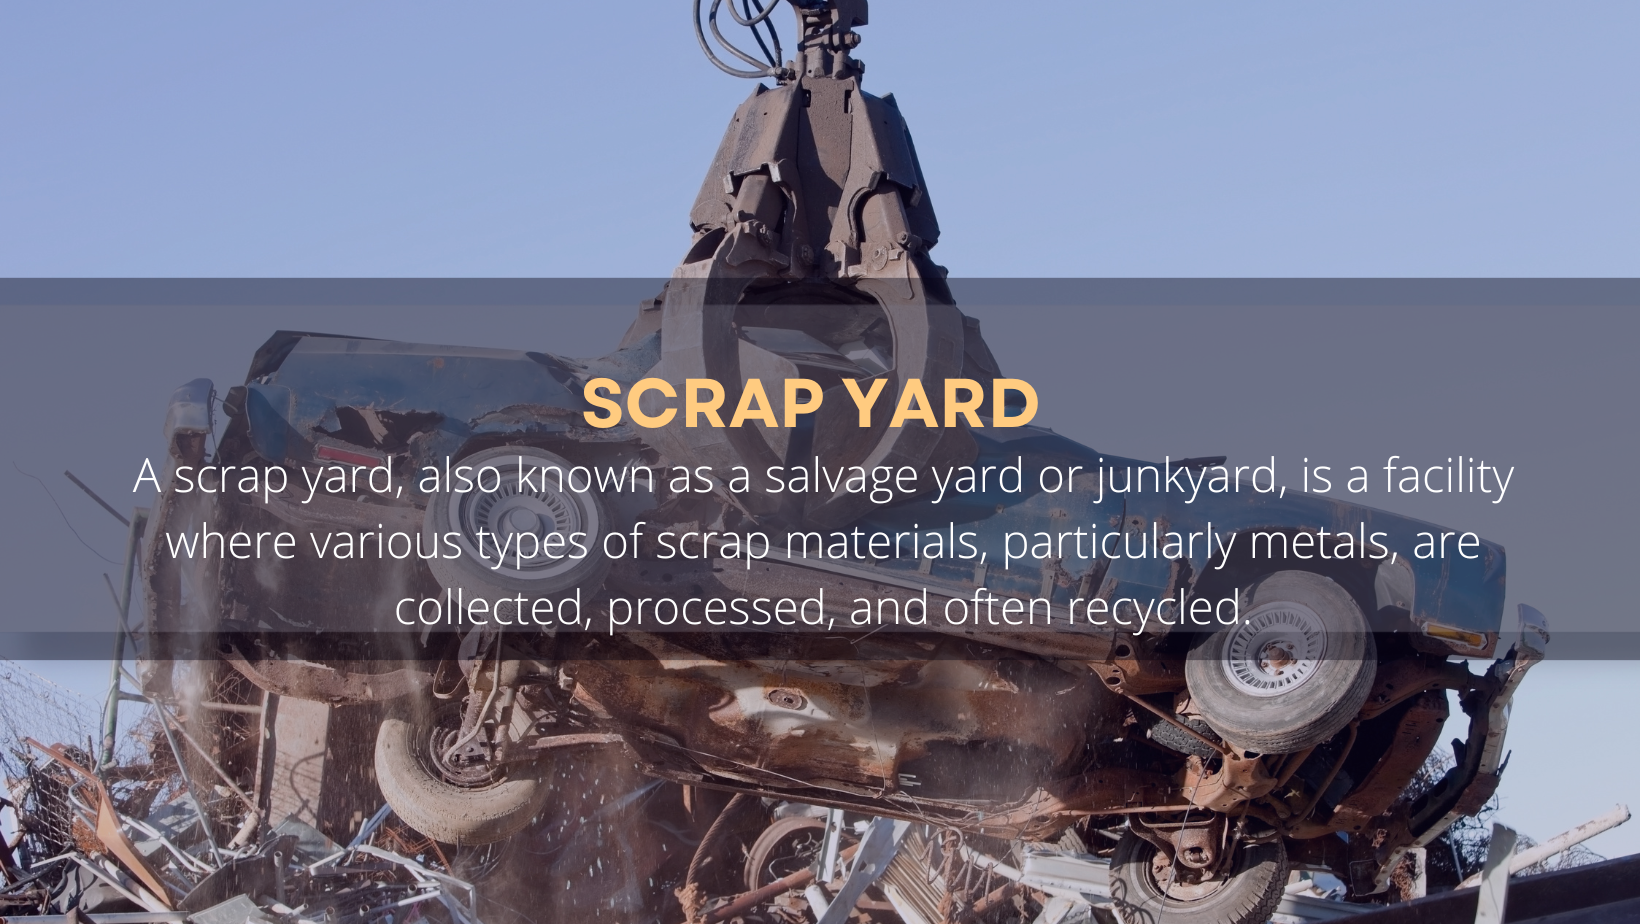 Scrap Yard